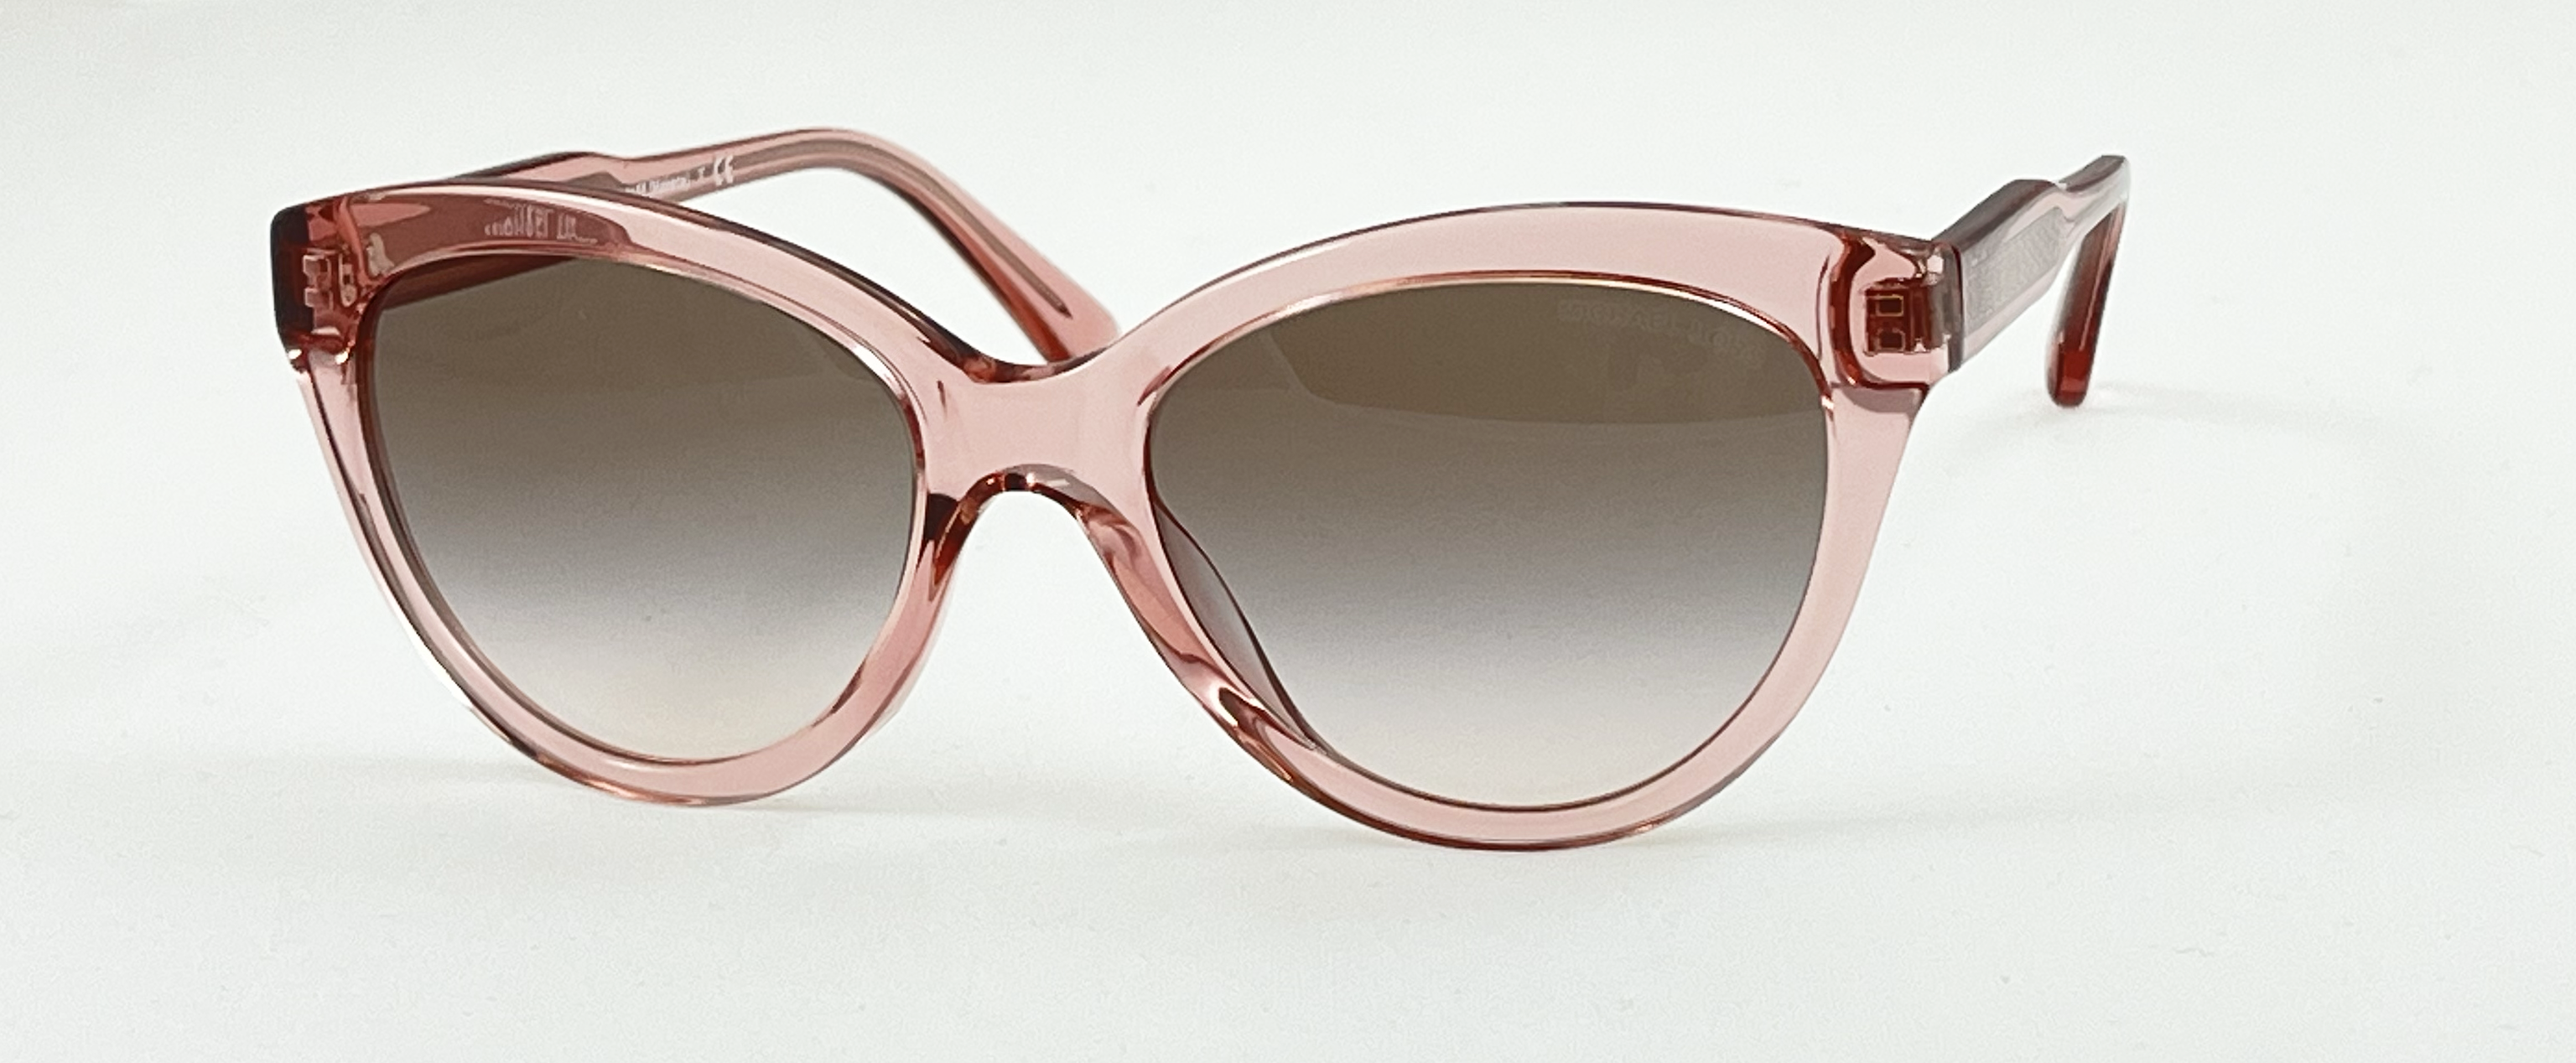 New Trend: Sunglasses at Night? – Fashion & Lifestyle Magazine-mncb.edu.vn